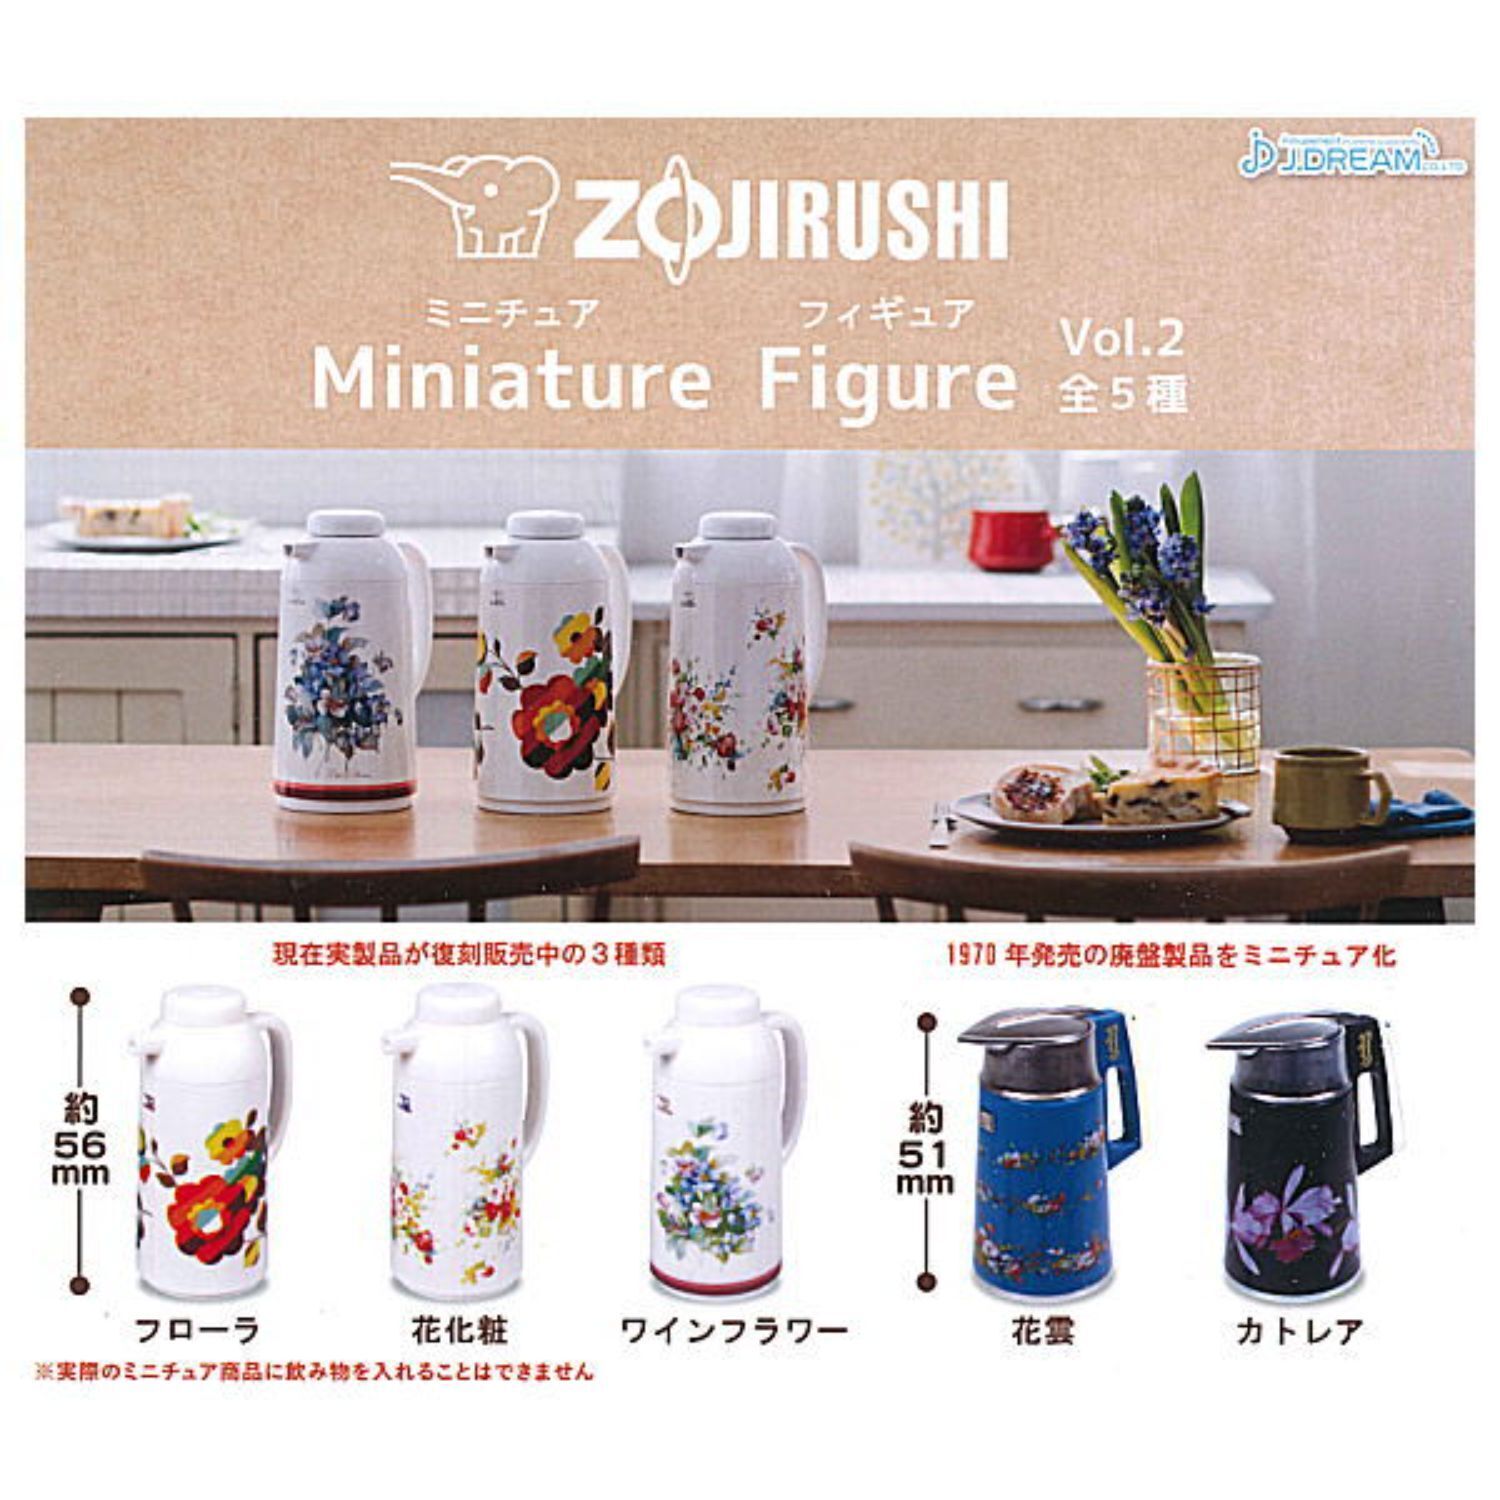 ZOJIRUSHI Miniature Figure Floral pot Capsule Toy 5 Types Full Comp Set Gacha